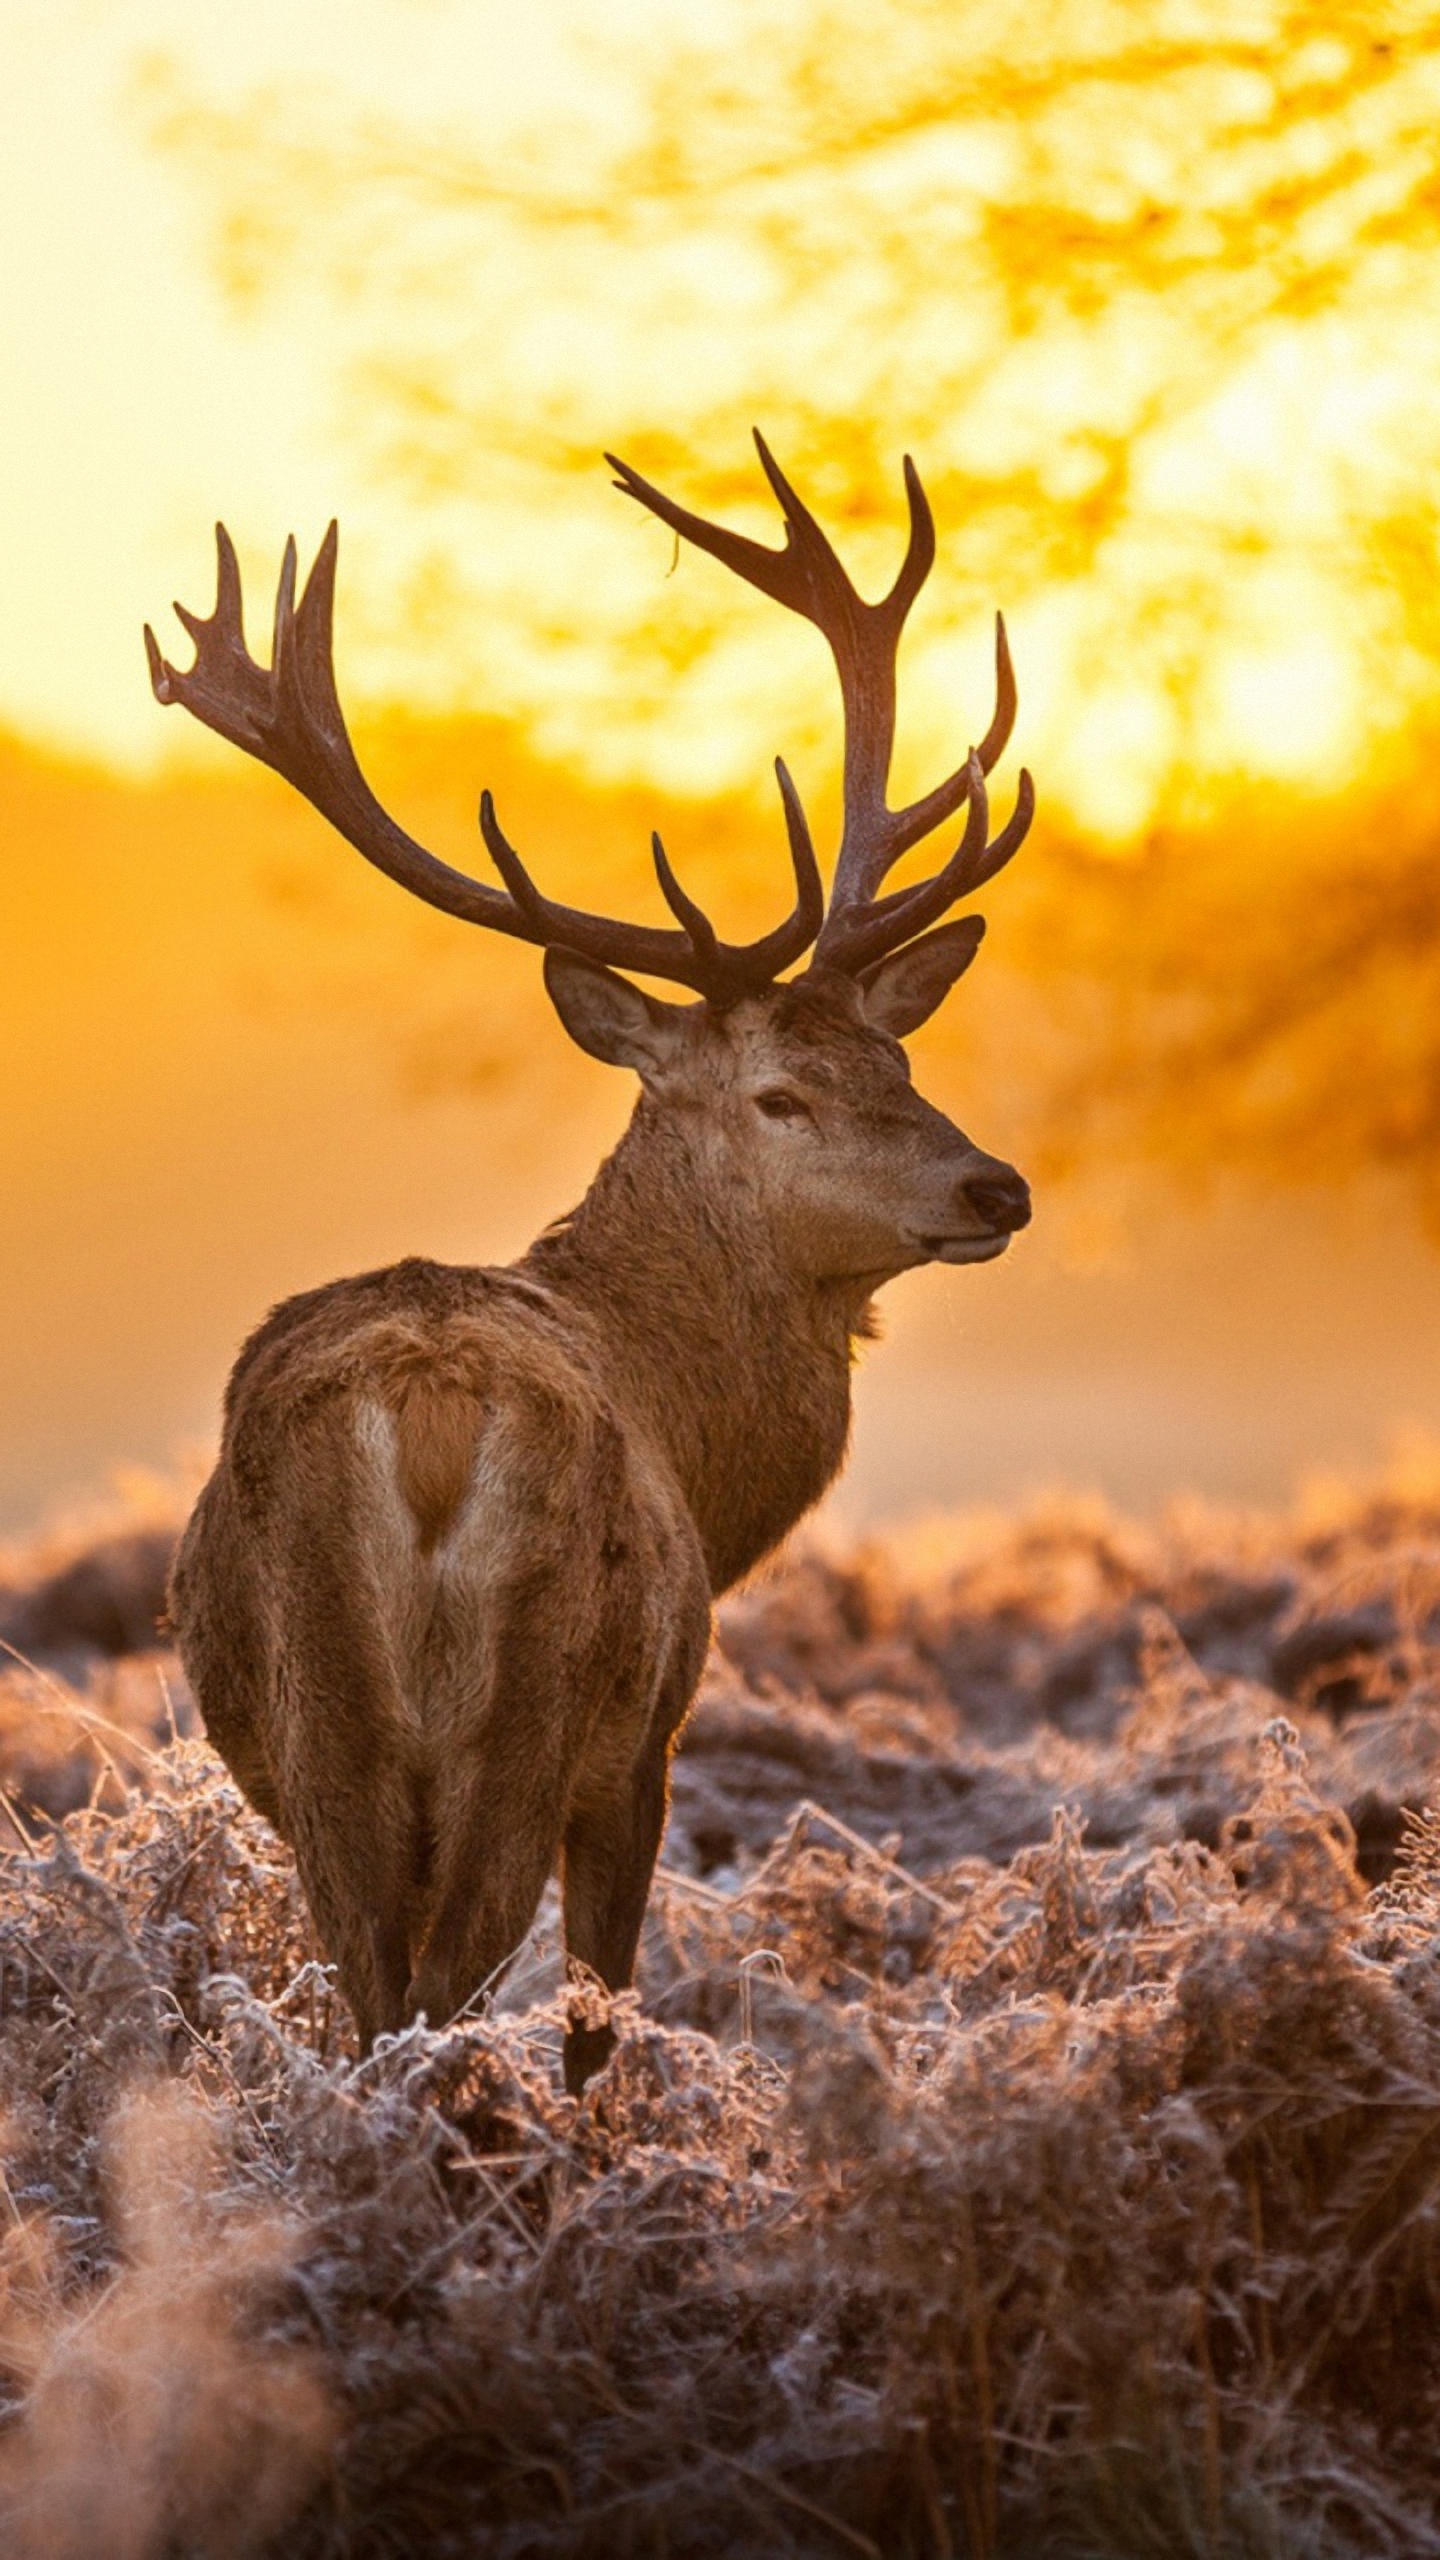 download deer grass sunset nature wallpaper for nokia lumia